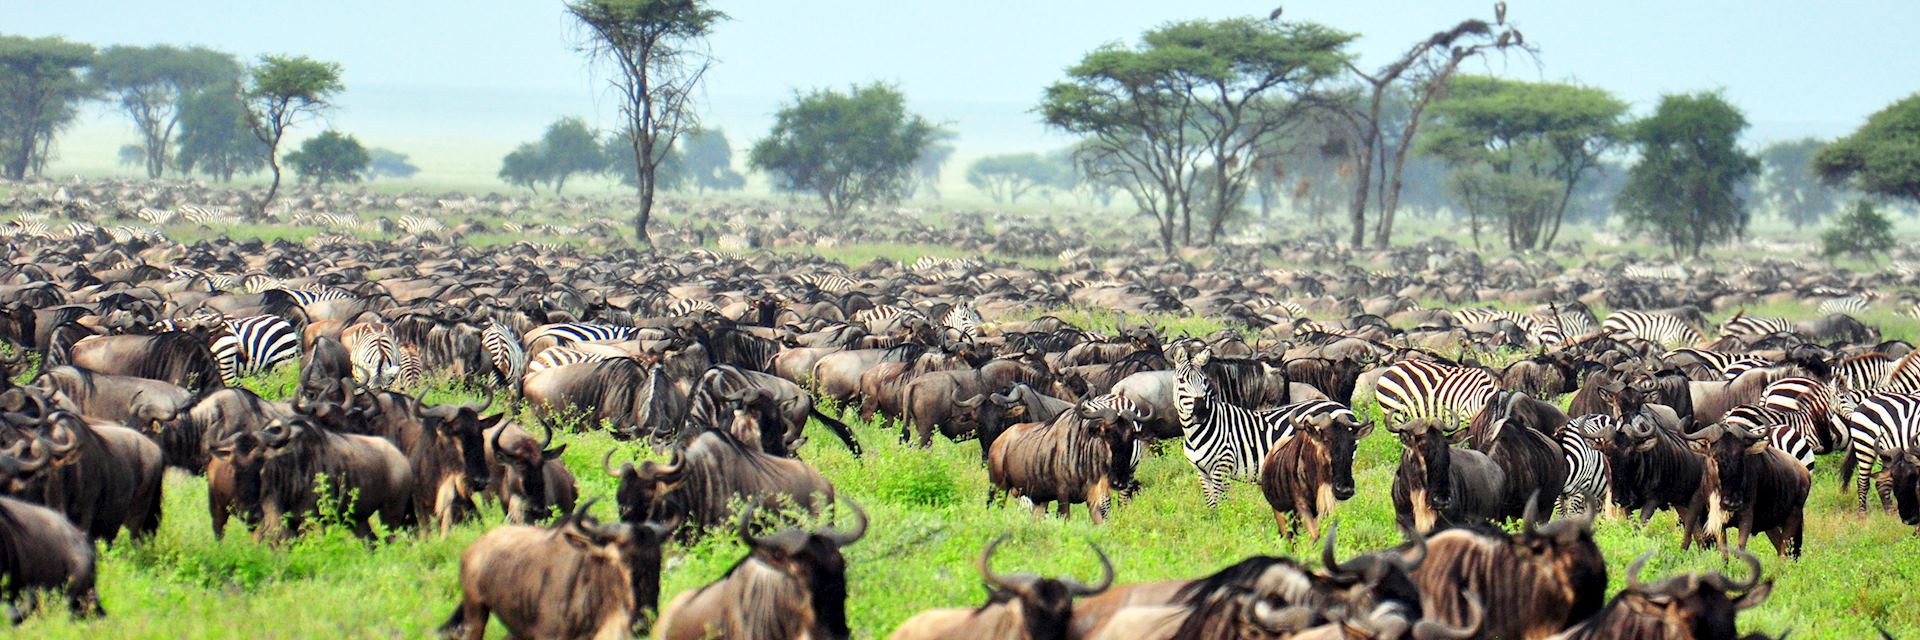 Great Migration, Serengeti National Park